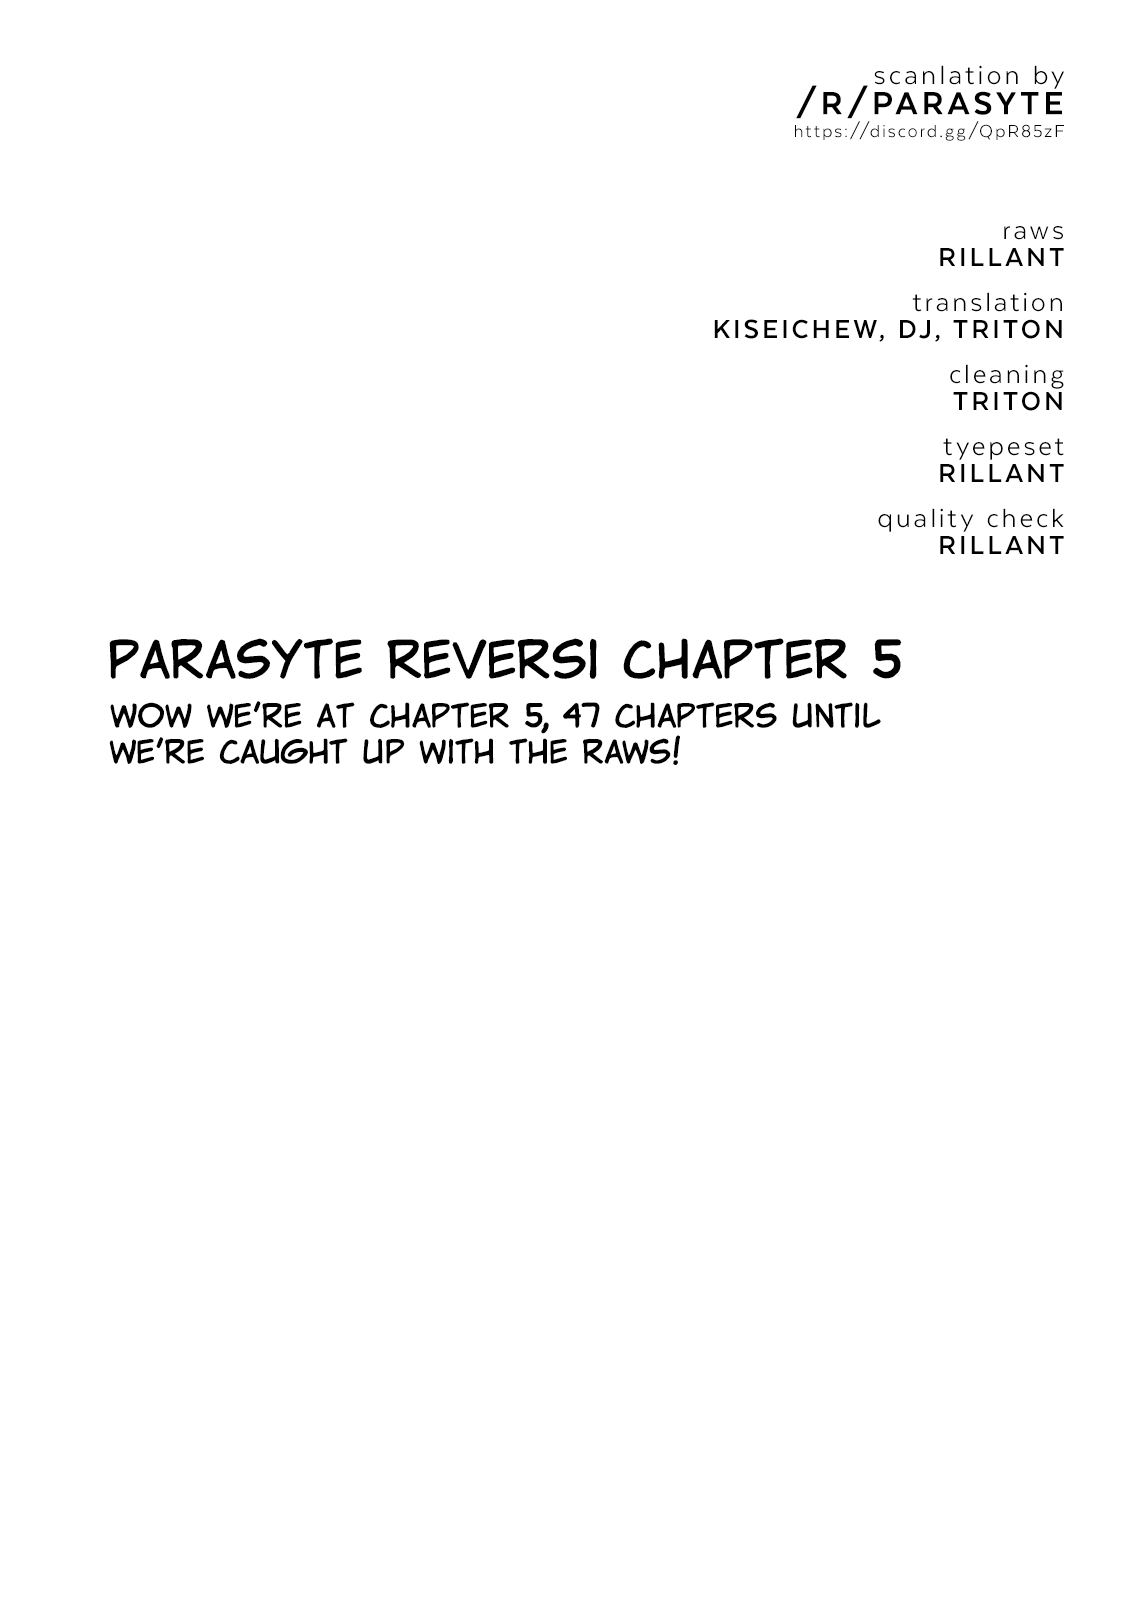 Parasyte Reversi Vol. 1 Ch. 5 Diablo III